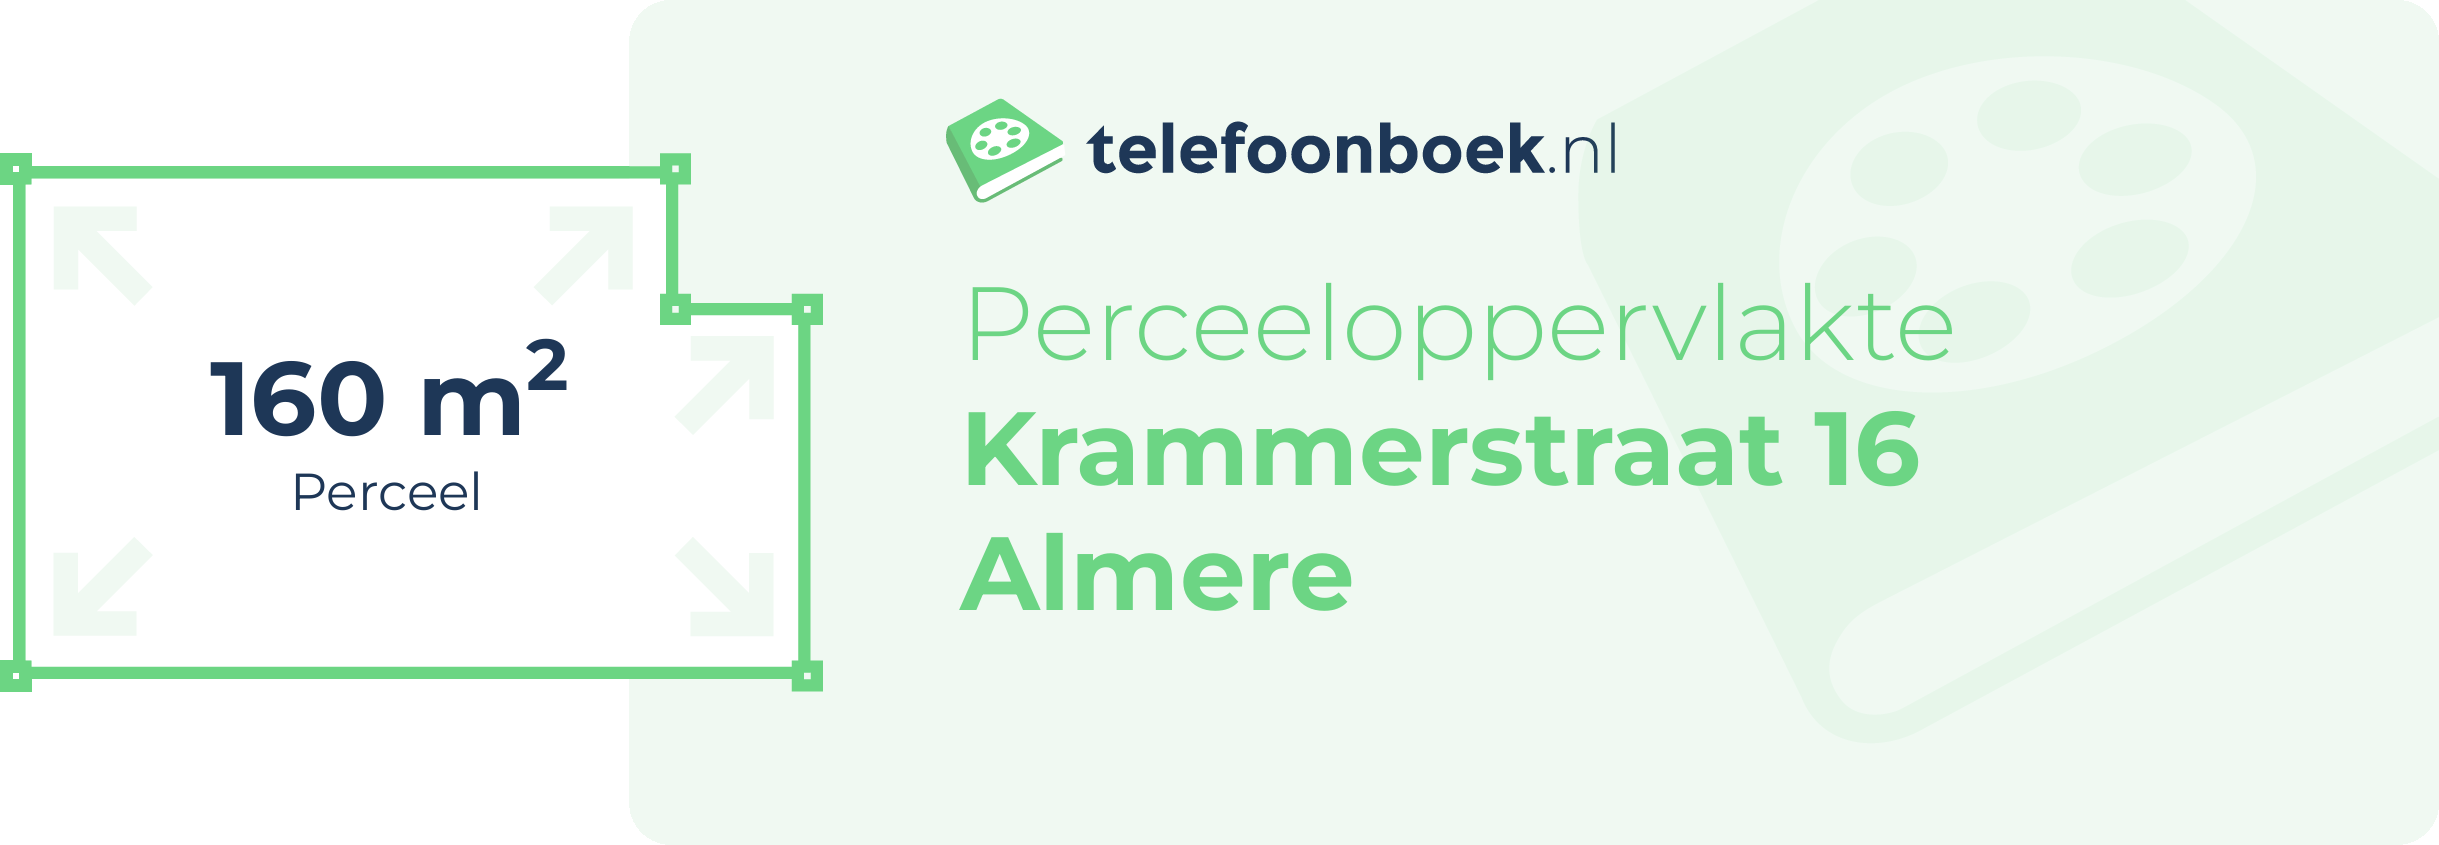 Perceeloppervlakte Krammerstraat 16 Almere